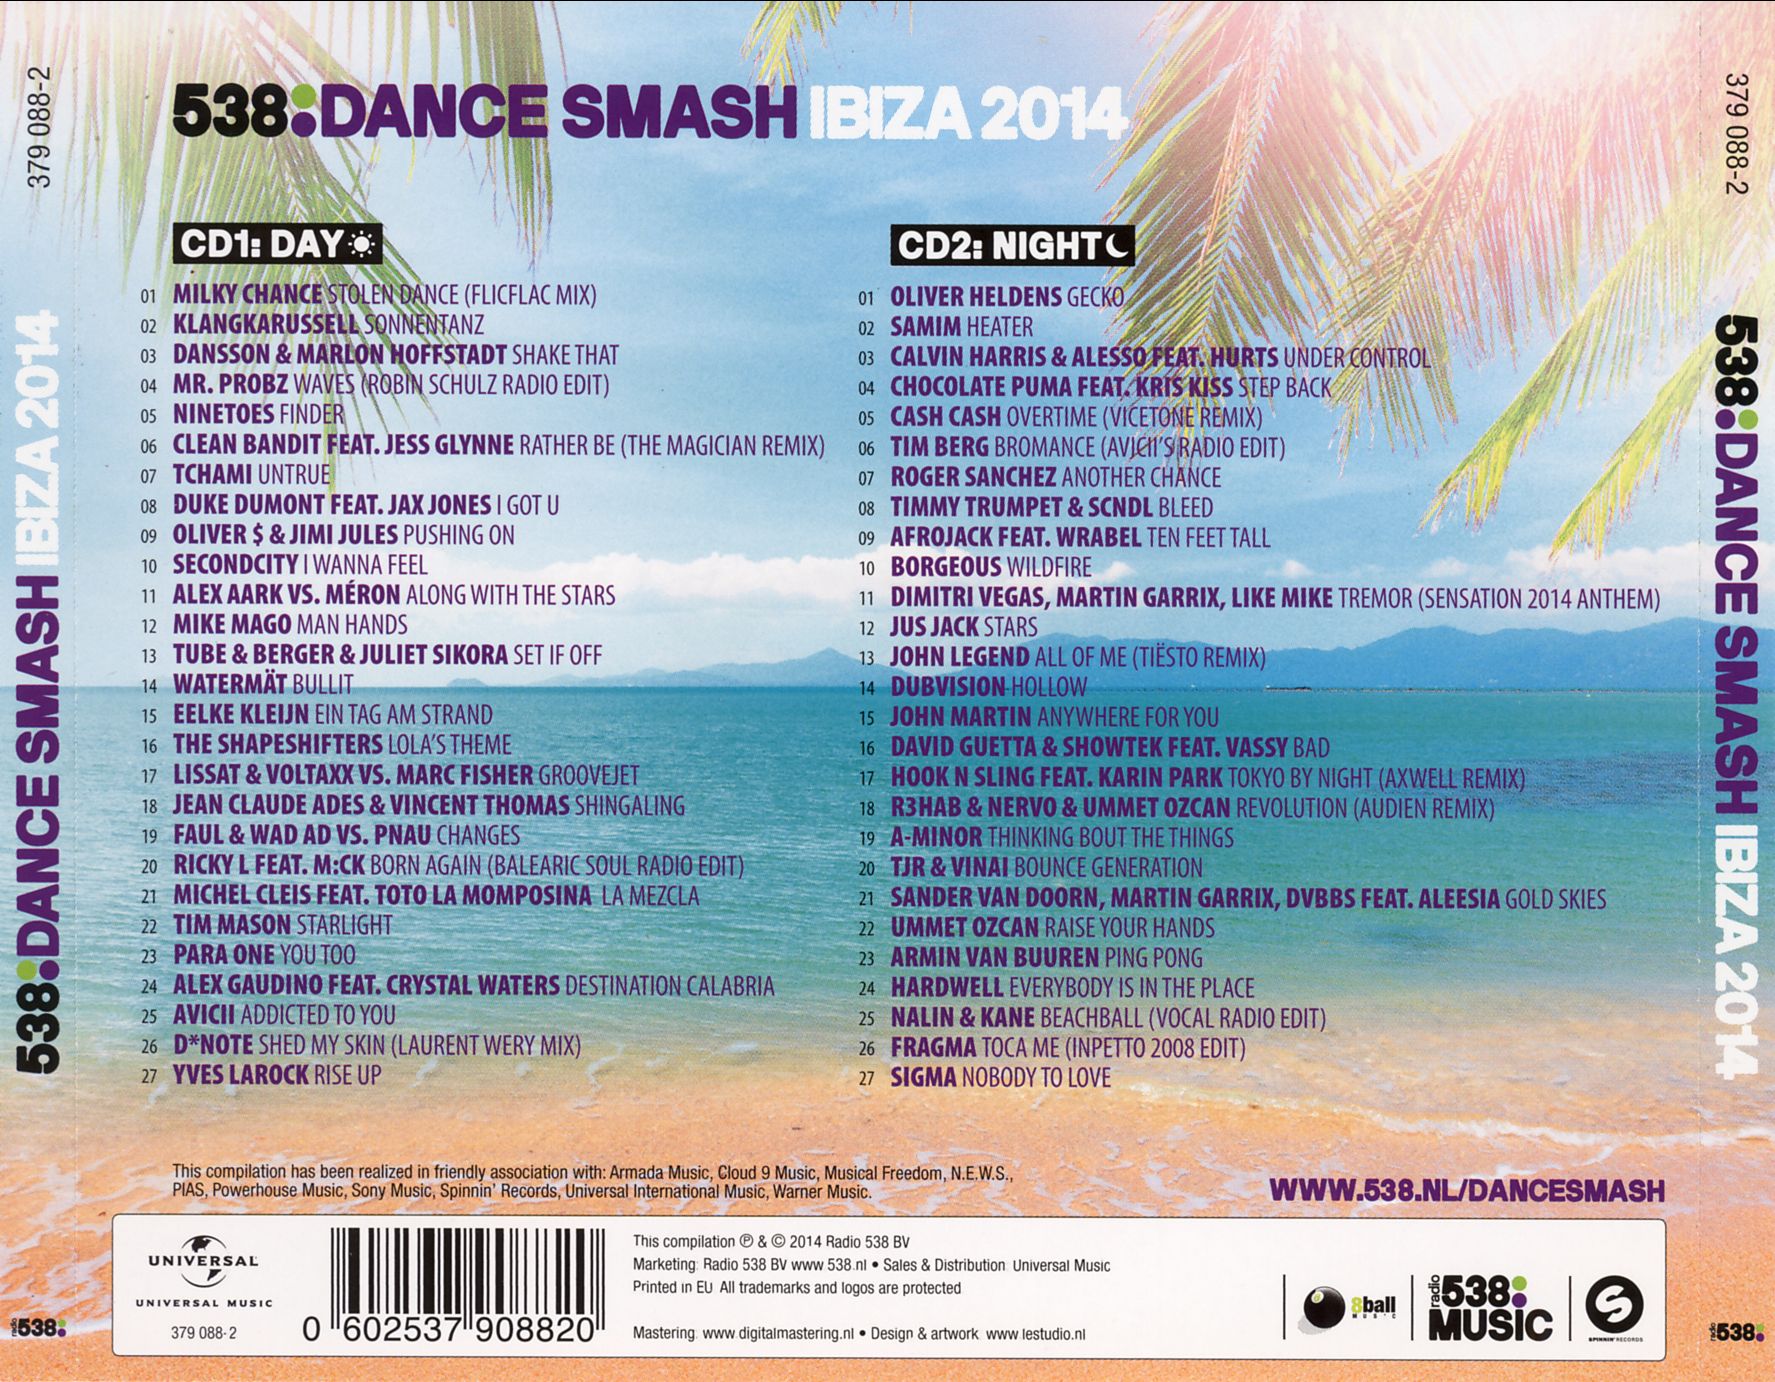 VA 538 Dance Smash Ibiza 2014 back | CD Covers Cover Century | 1.000.000 Album Art covers free